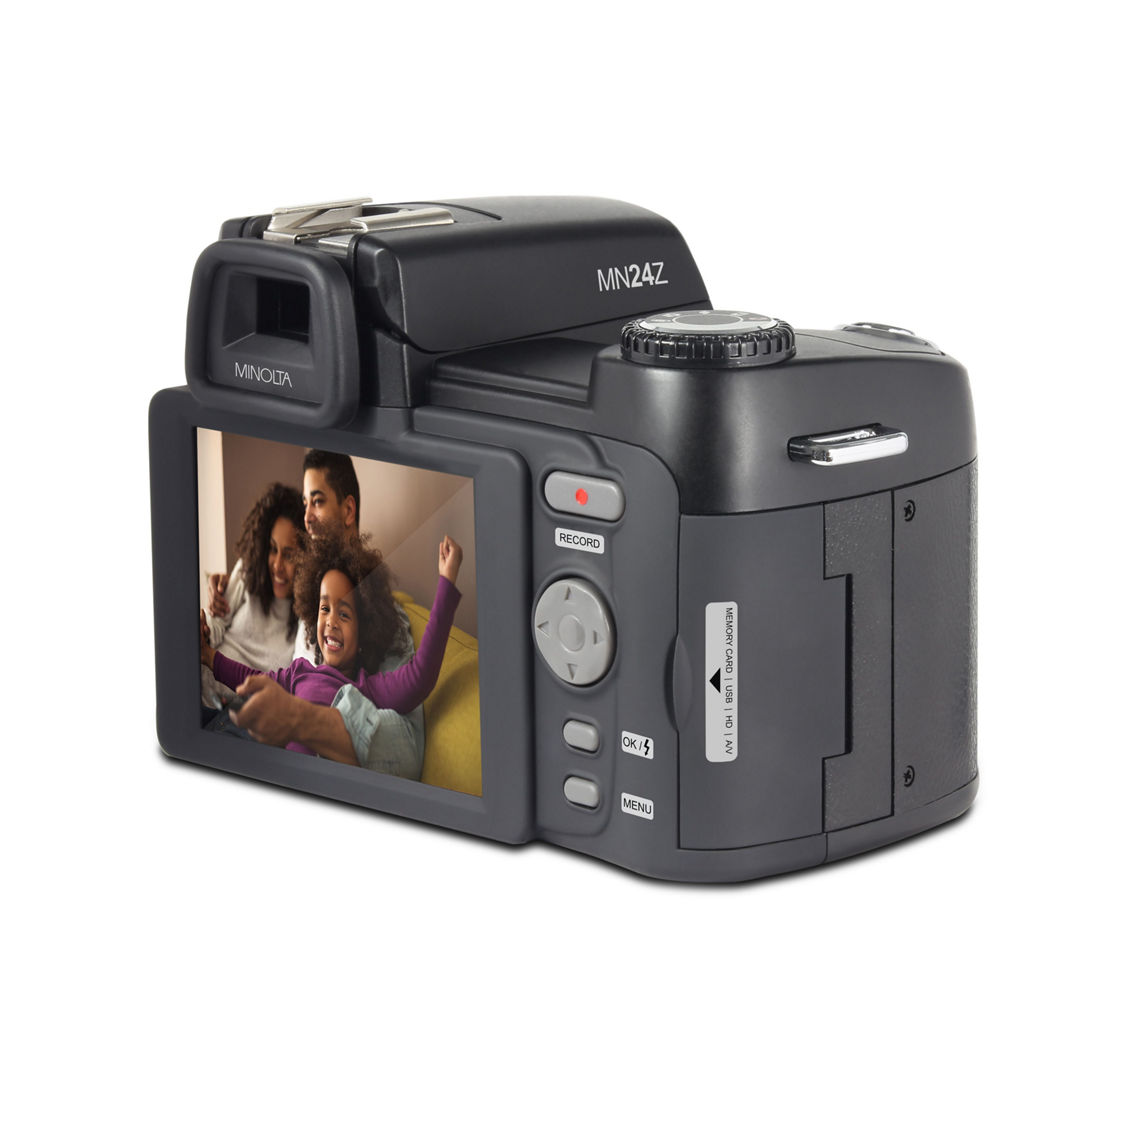 Minolta MN24Z 33 MP / 1080P HD Digital Camera with Interchangeable Lens Kit - Image 4 of 5